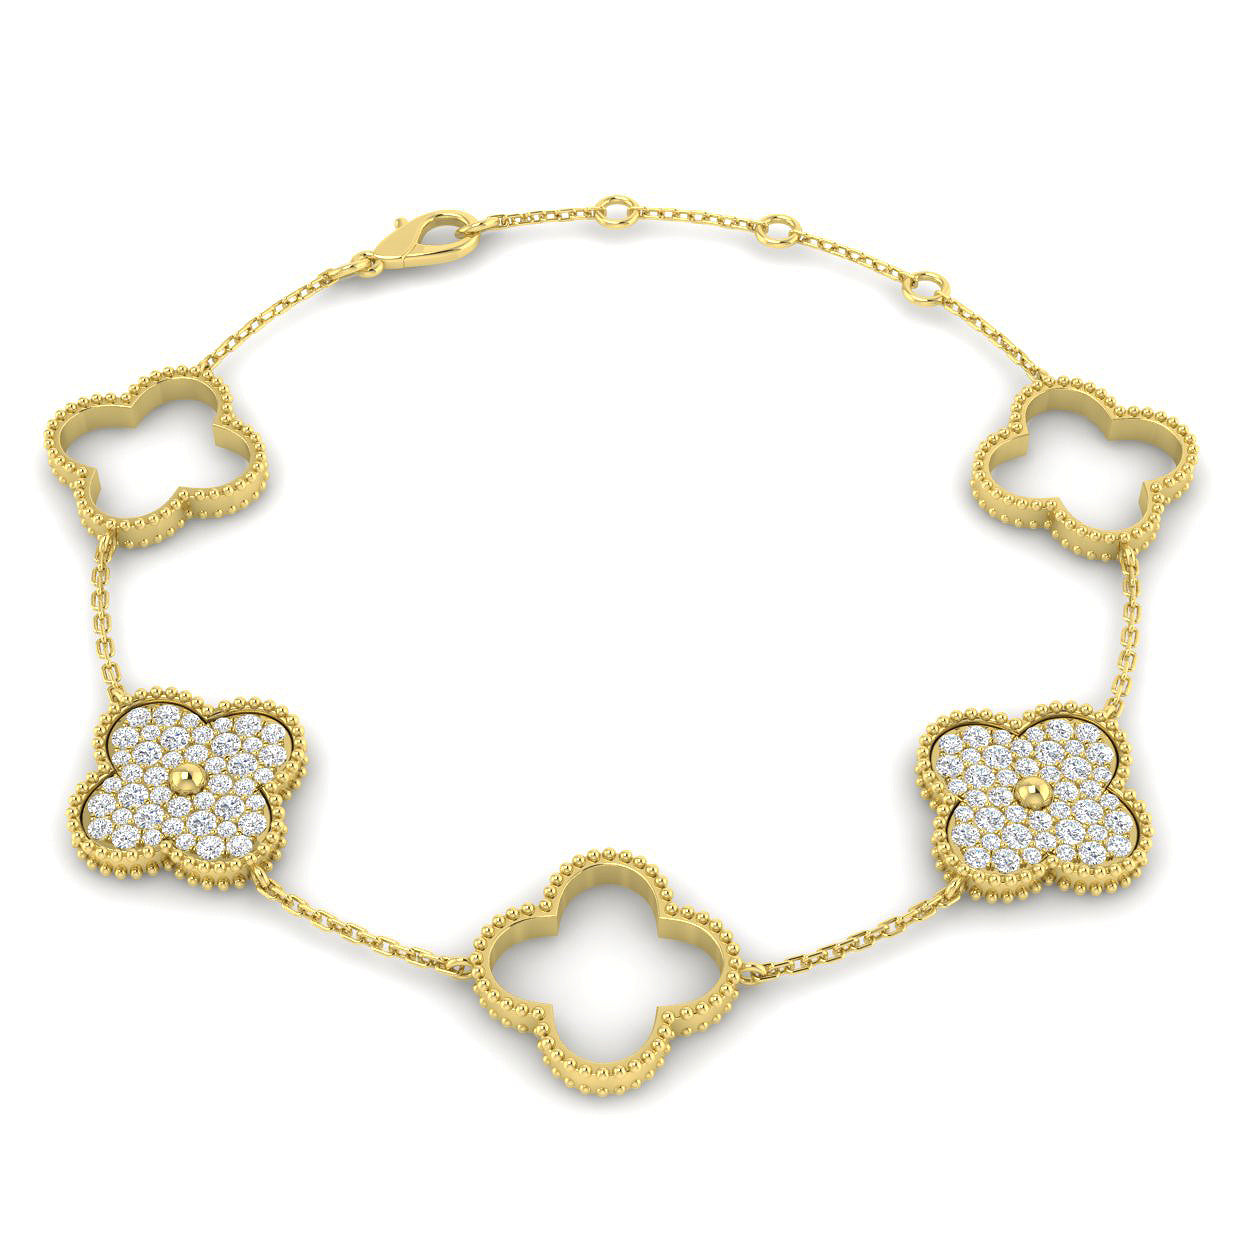 9ct Gold Diamond Shape Bracelet - LM1005 - Hallmark Jewellers Formby & The Jewellers Bench Widnes